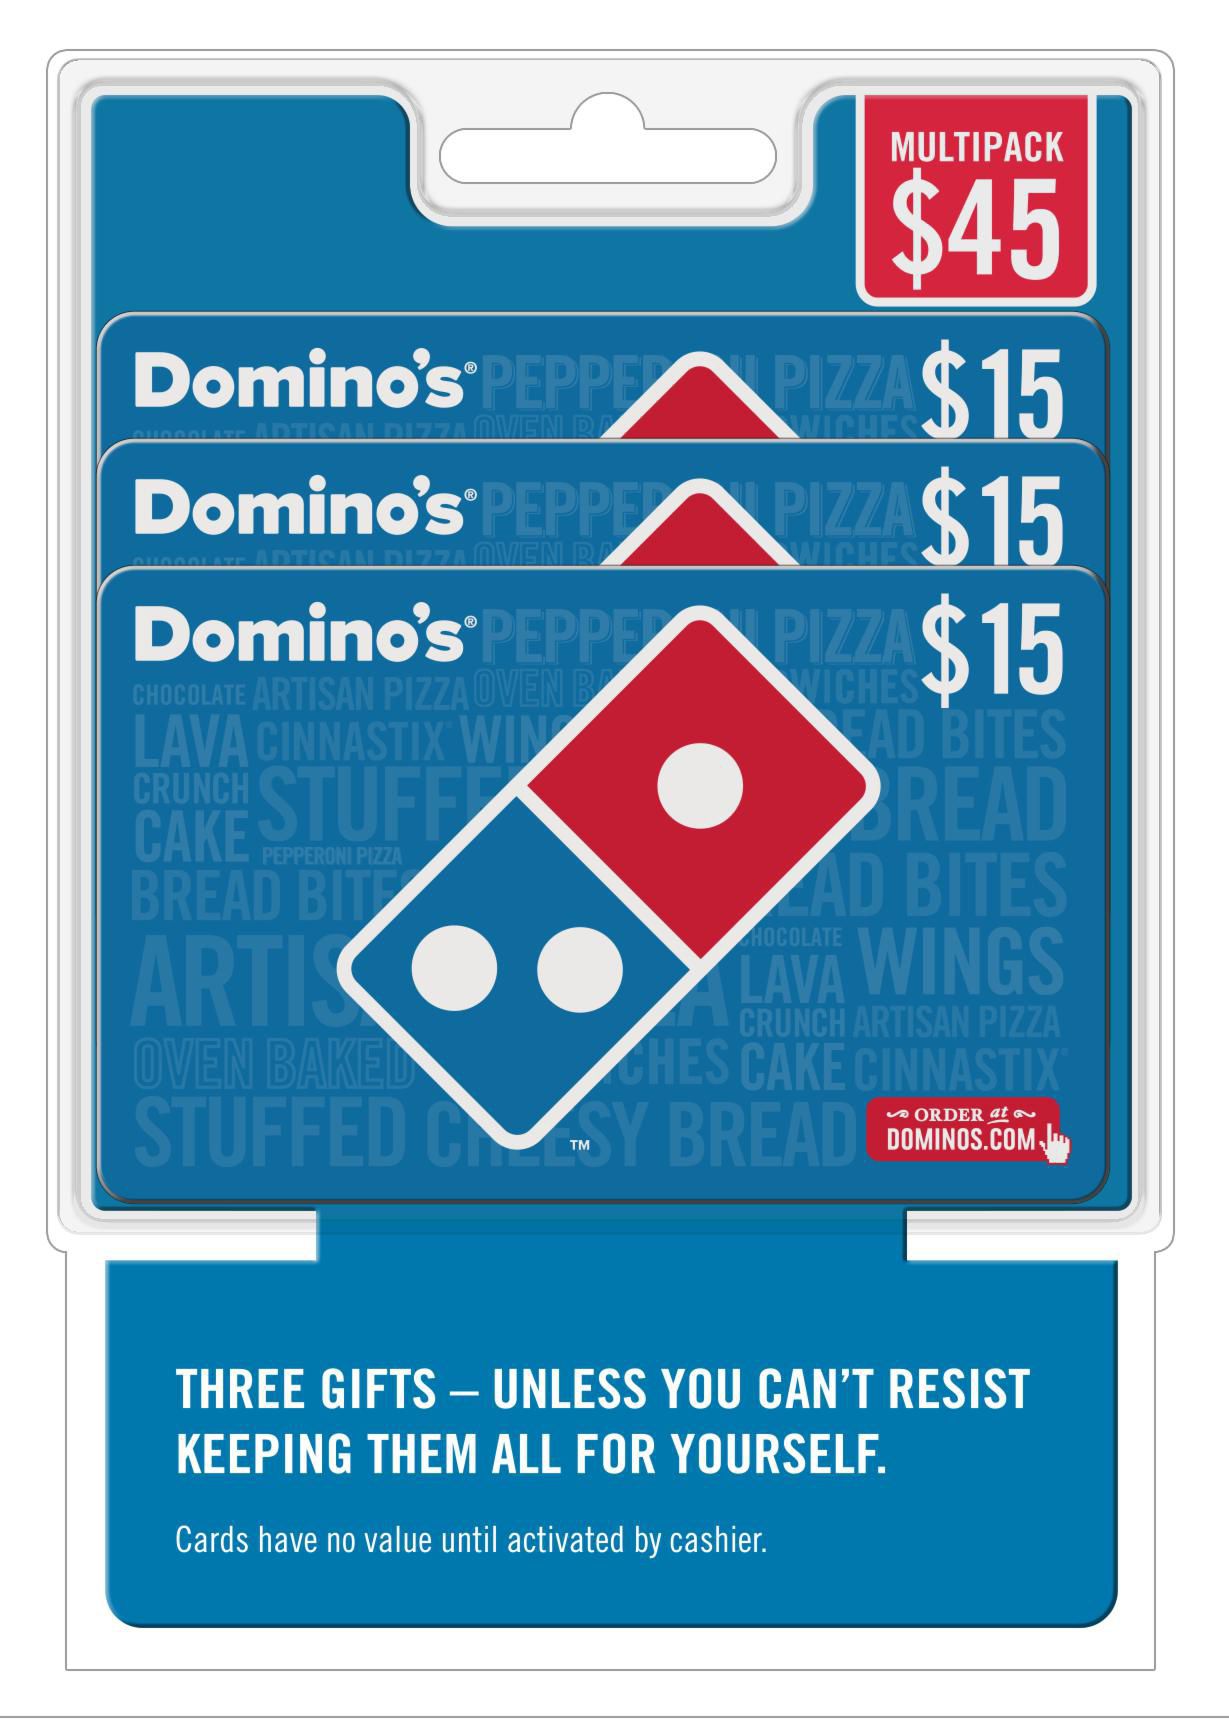 BJ's $45 Domino's gift card $36